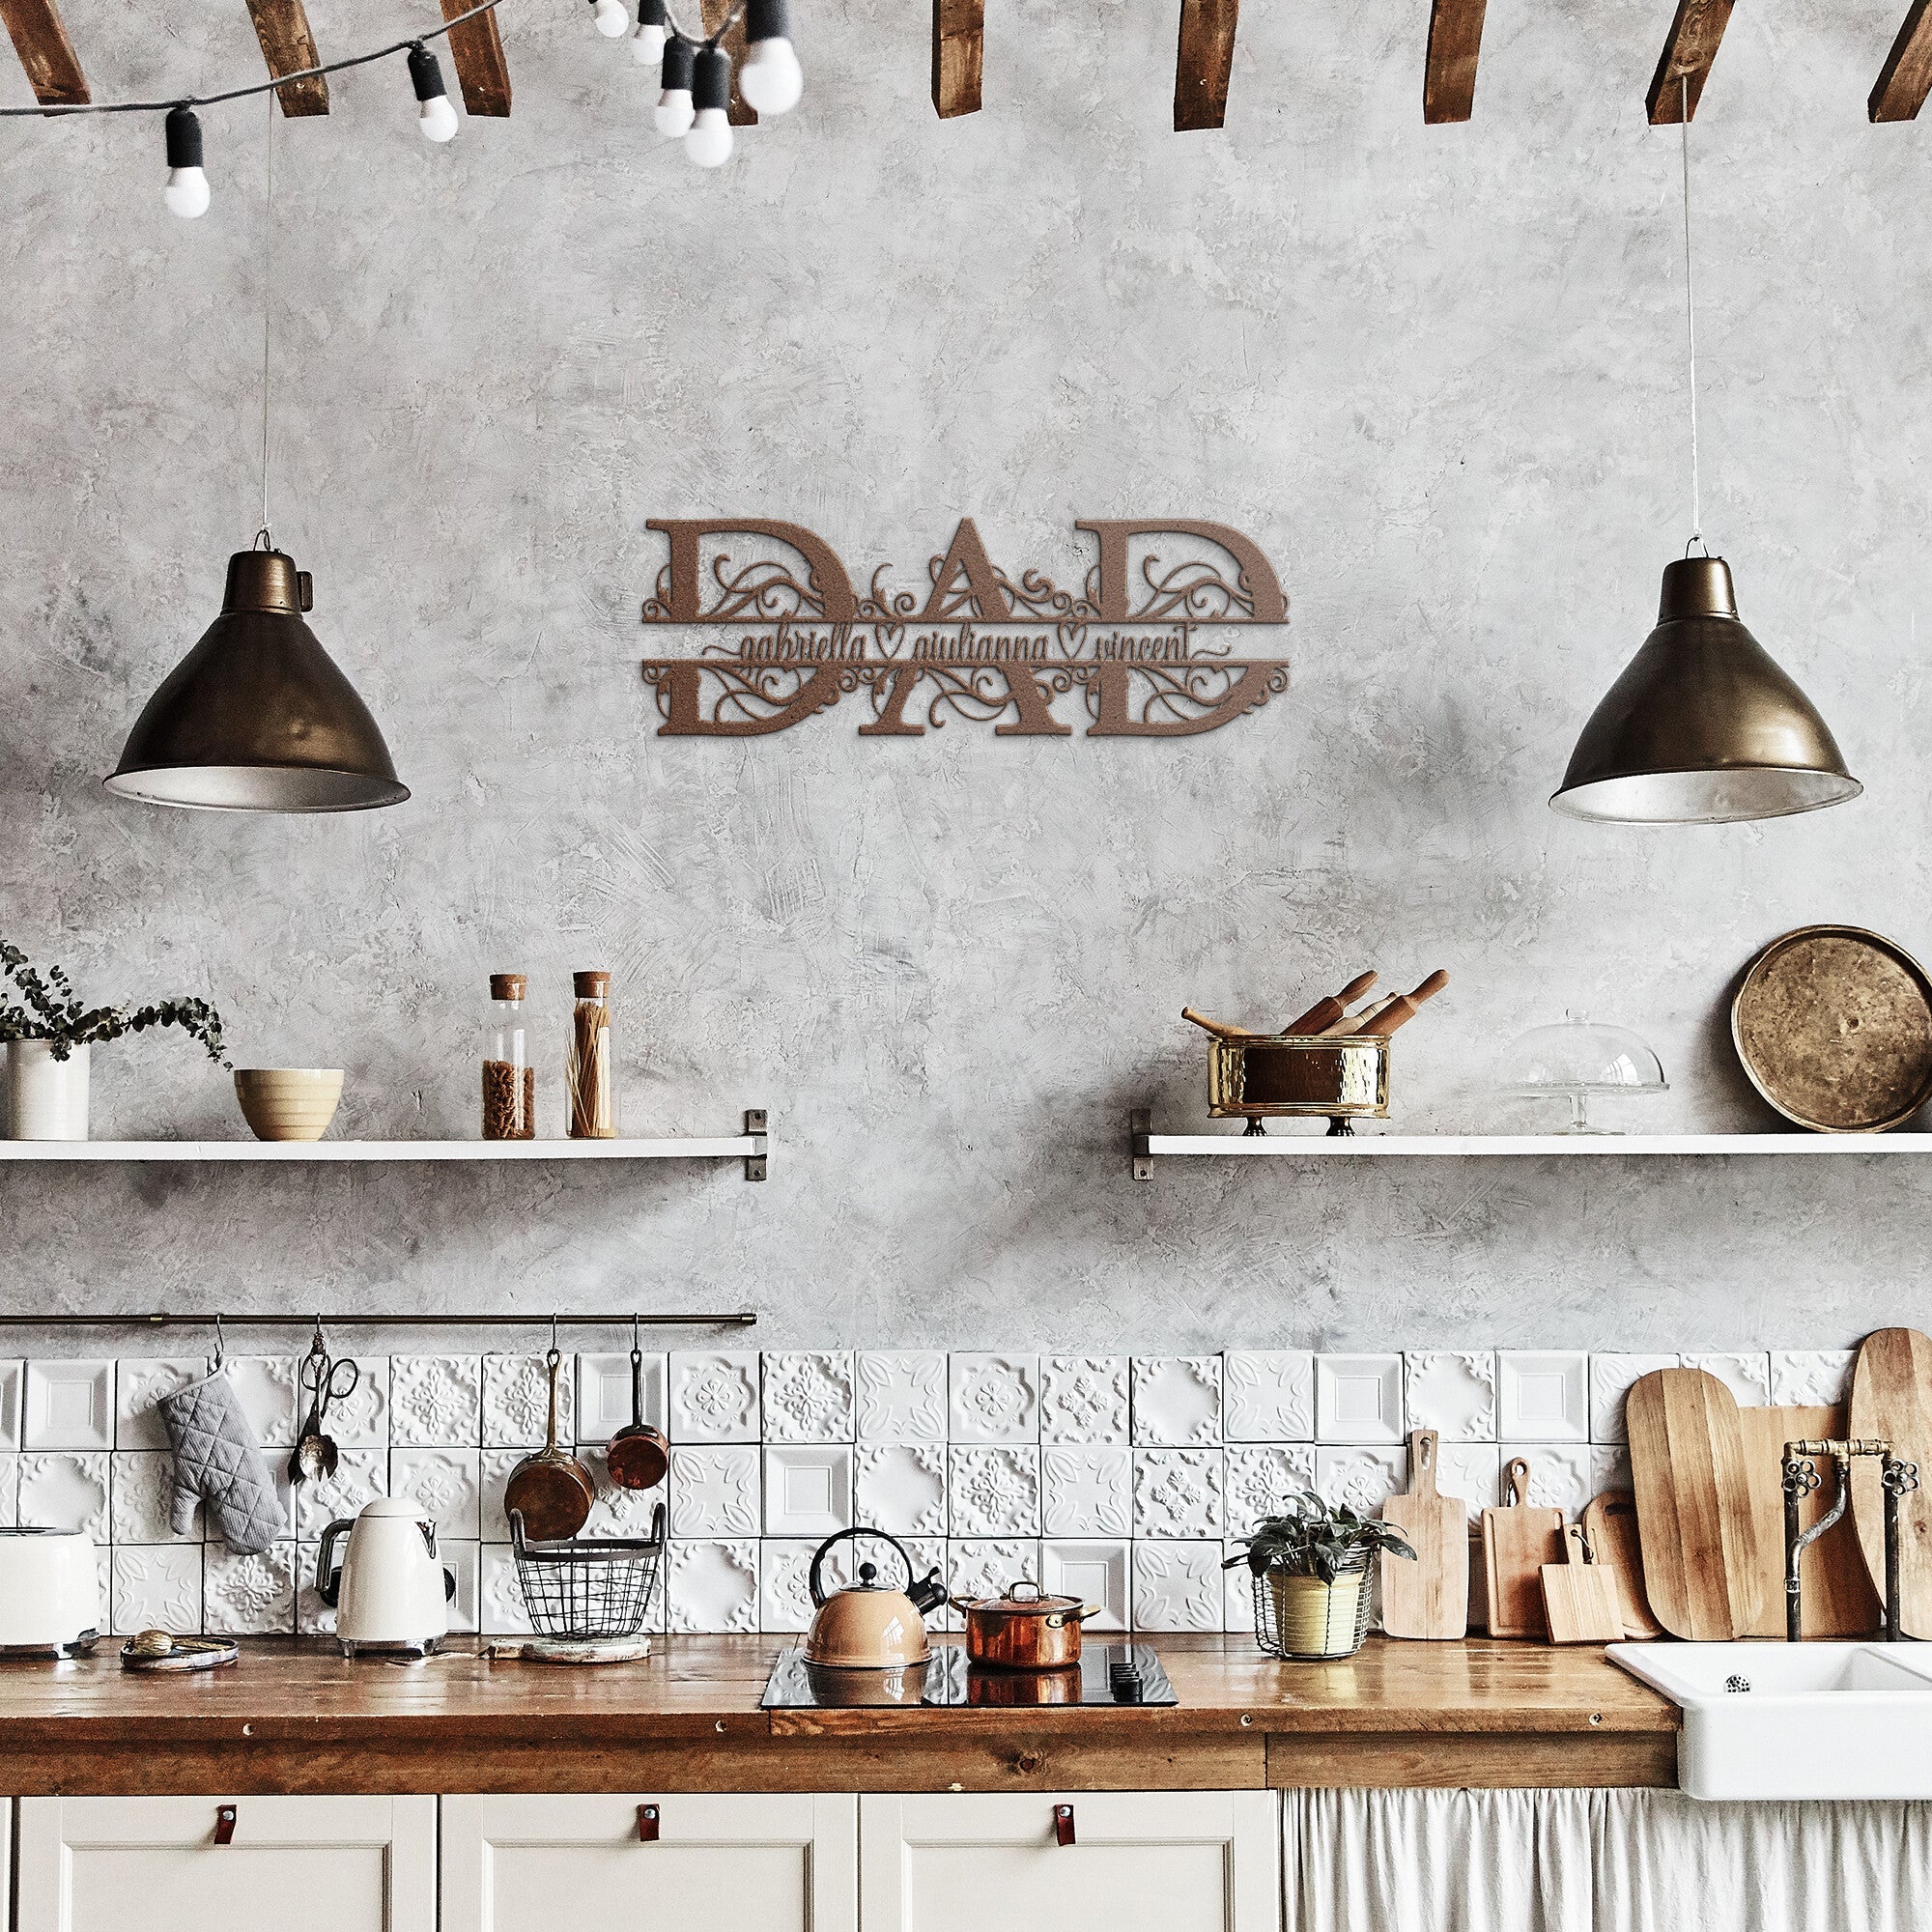 Personalized DAD Monogram - Cool Metal Signs